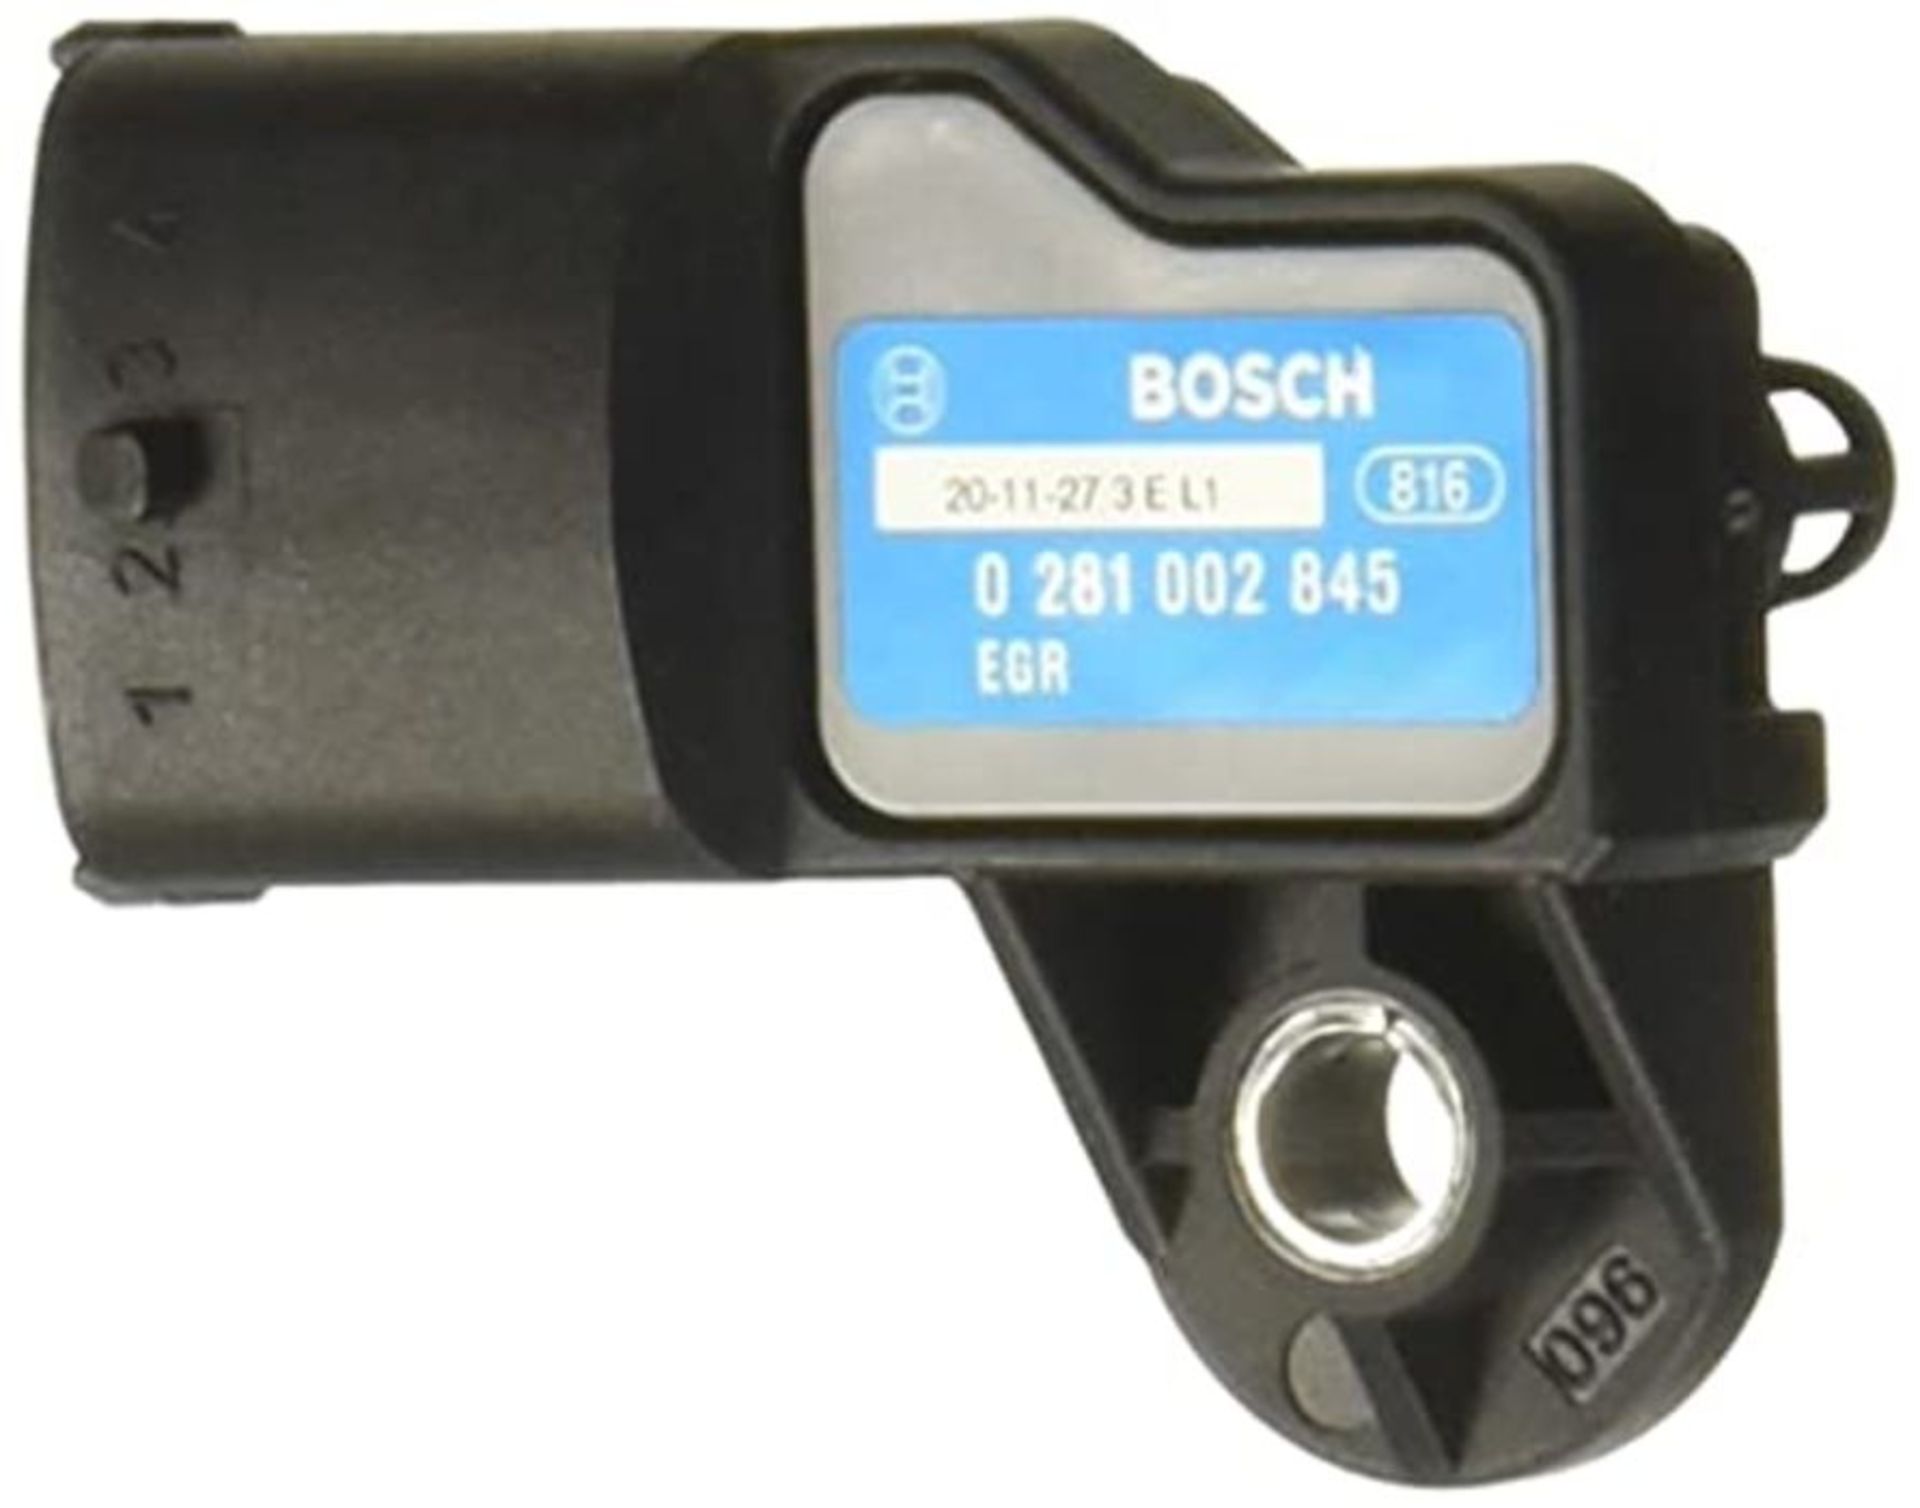 Bosch 0281002845 Pressure and Temperature Sensor